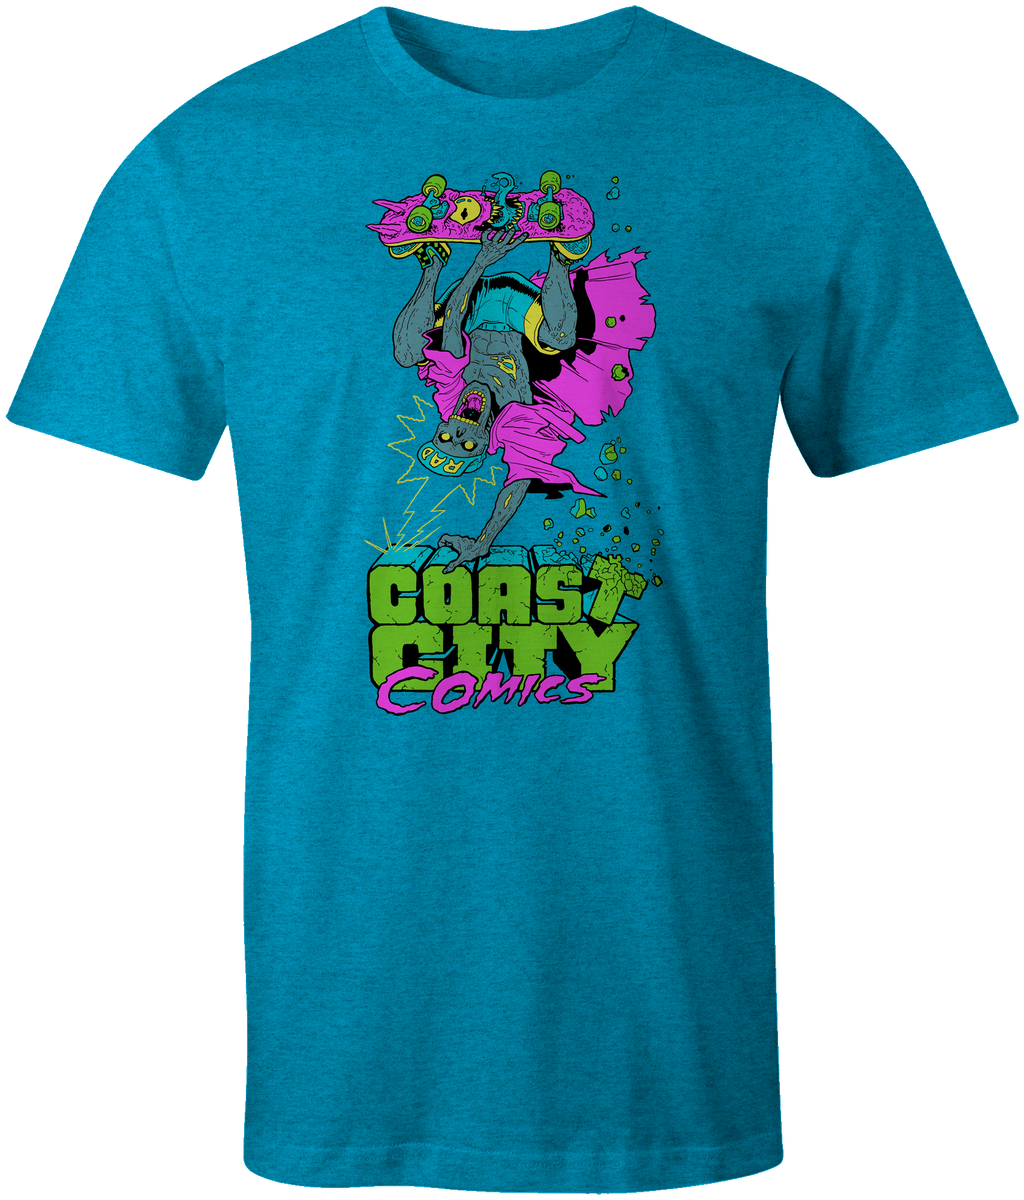 T-SHIRT: Coast City Comics - RAD WRAITH Shirt By James Callahan (BLUE ...